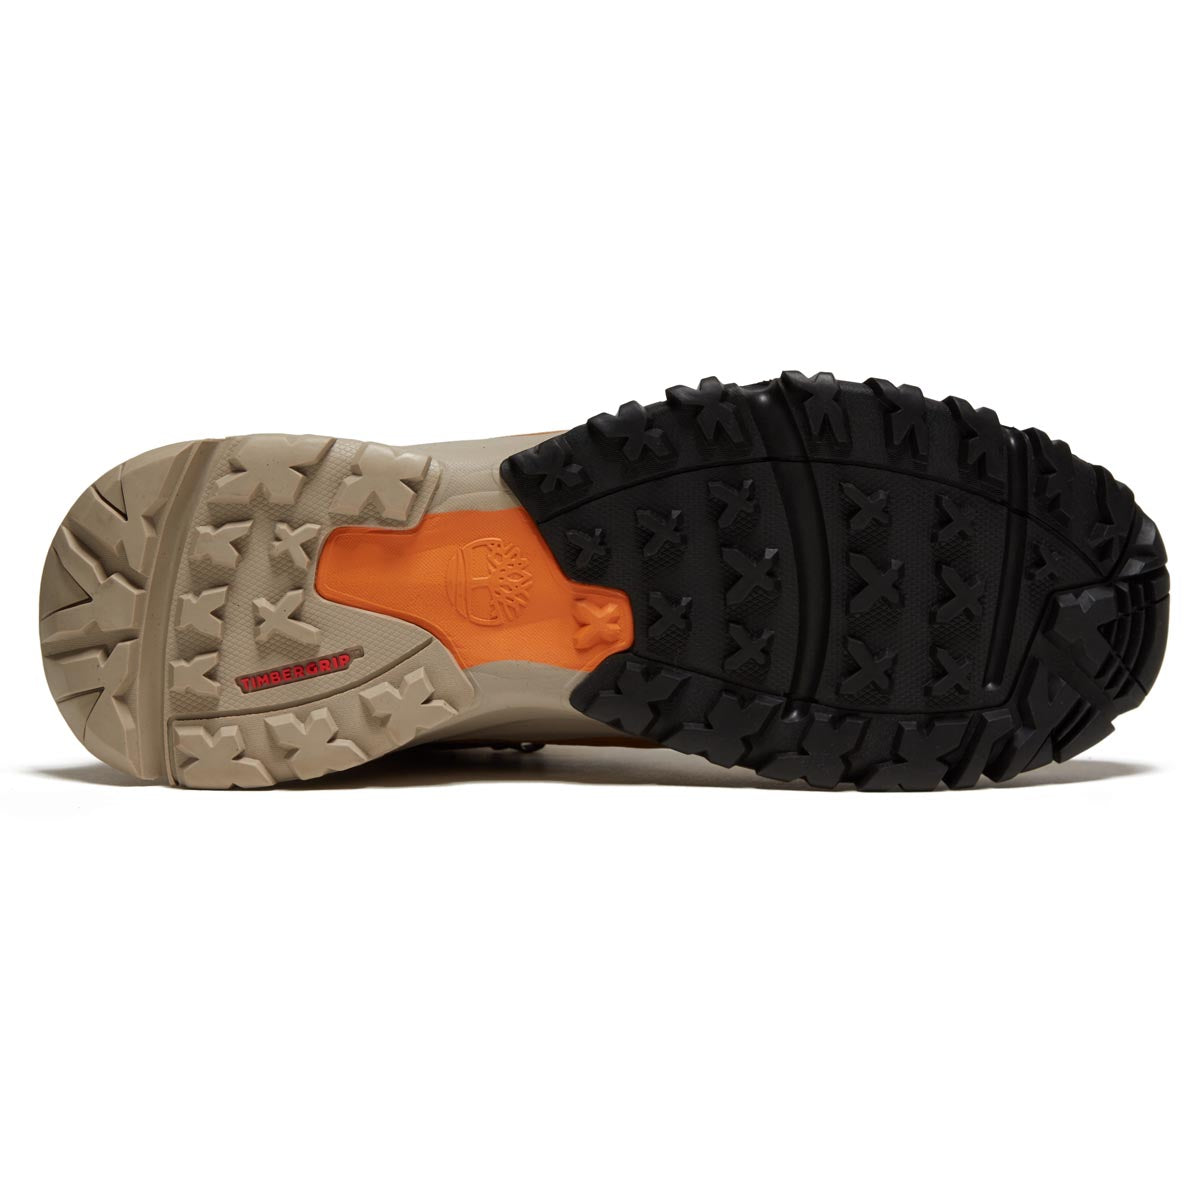 Timberland Motion Scramble Mid Lace Up Wp Shoes - Wheat Nubuck image 4